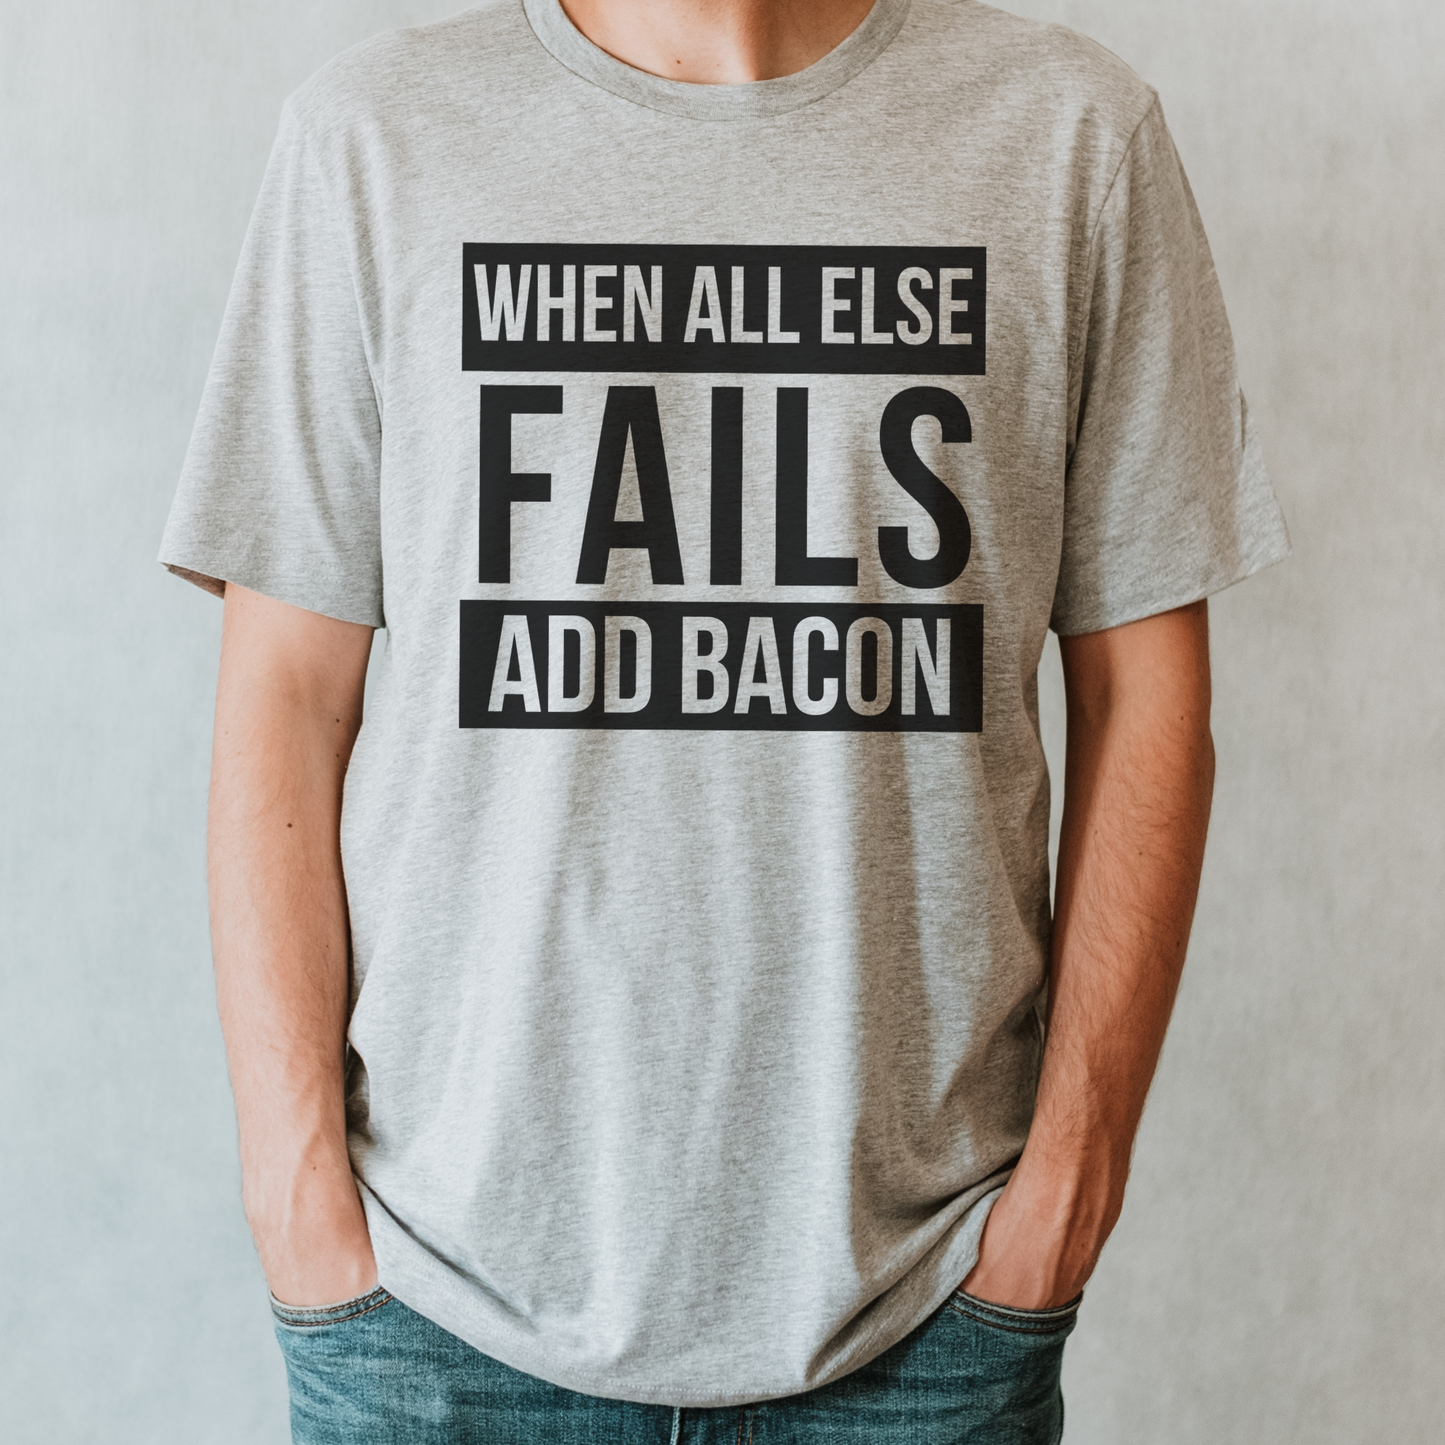 Add Bacon Shirt